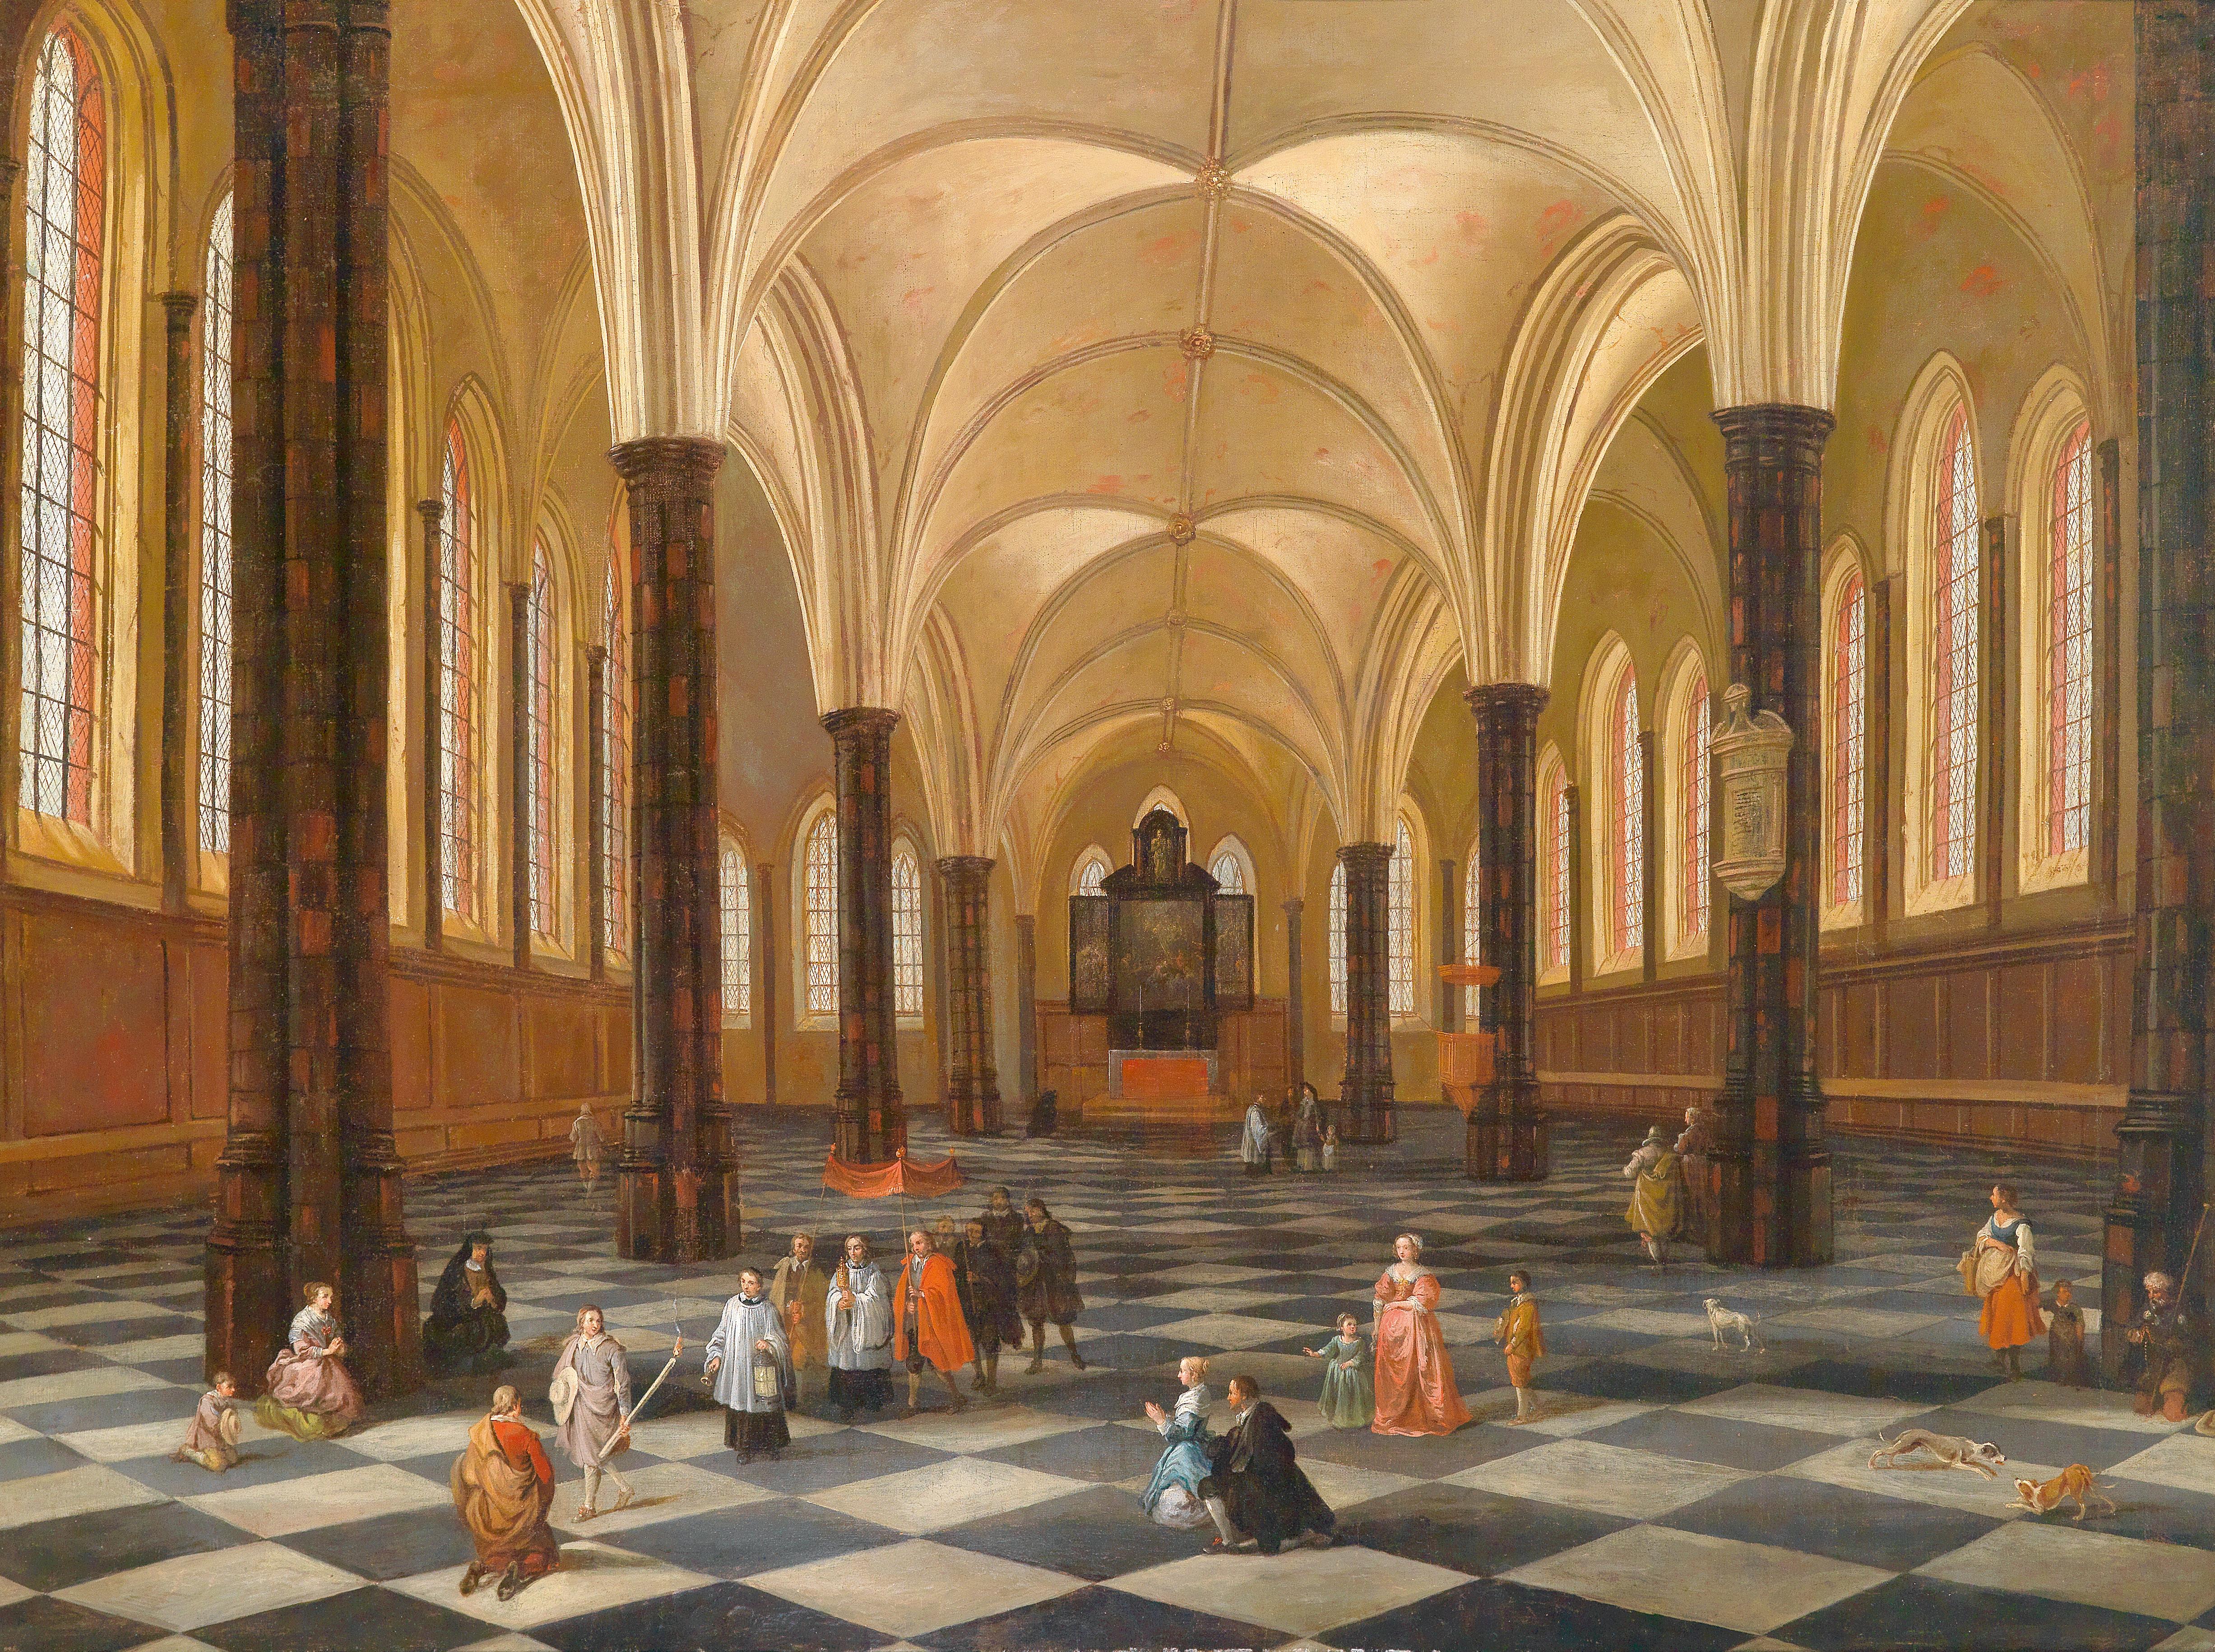 Interior of a Catholic church 17th century